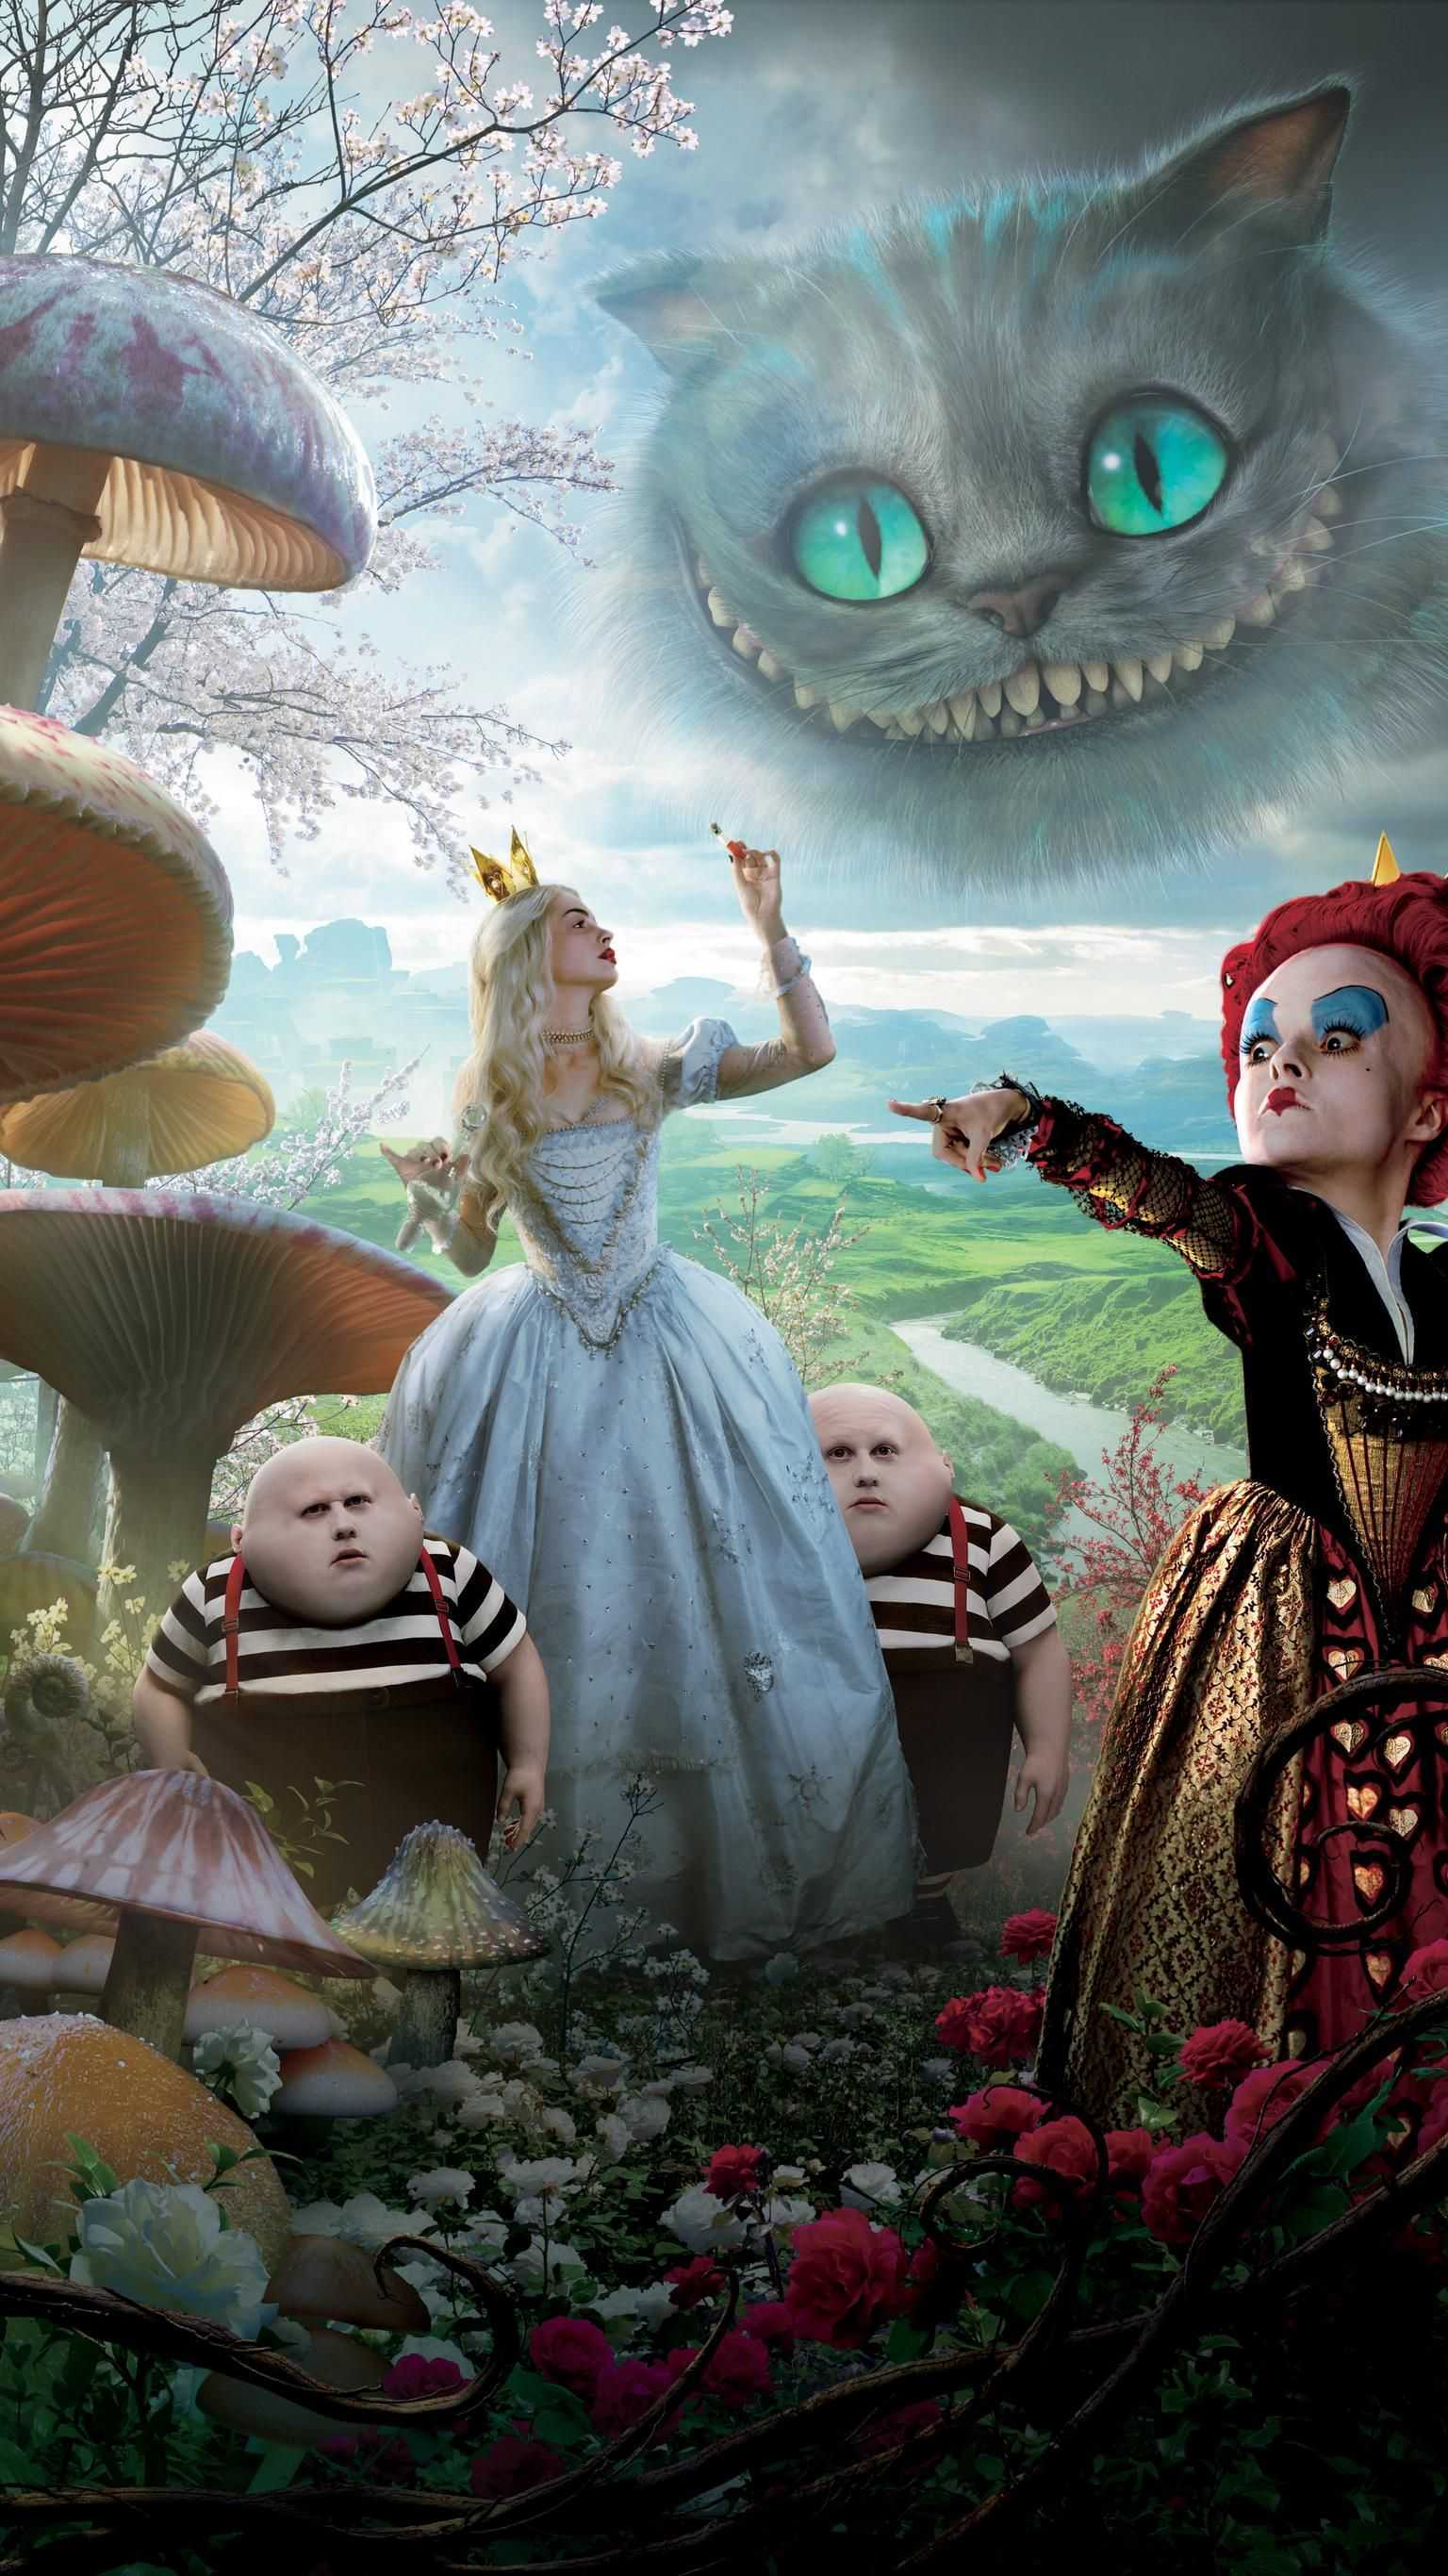 Alice in Wonderland iPhone wallpapers feel free